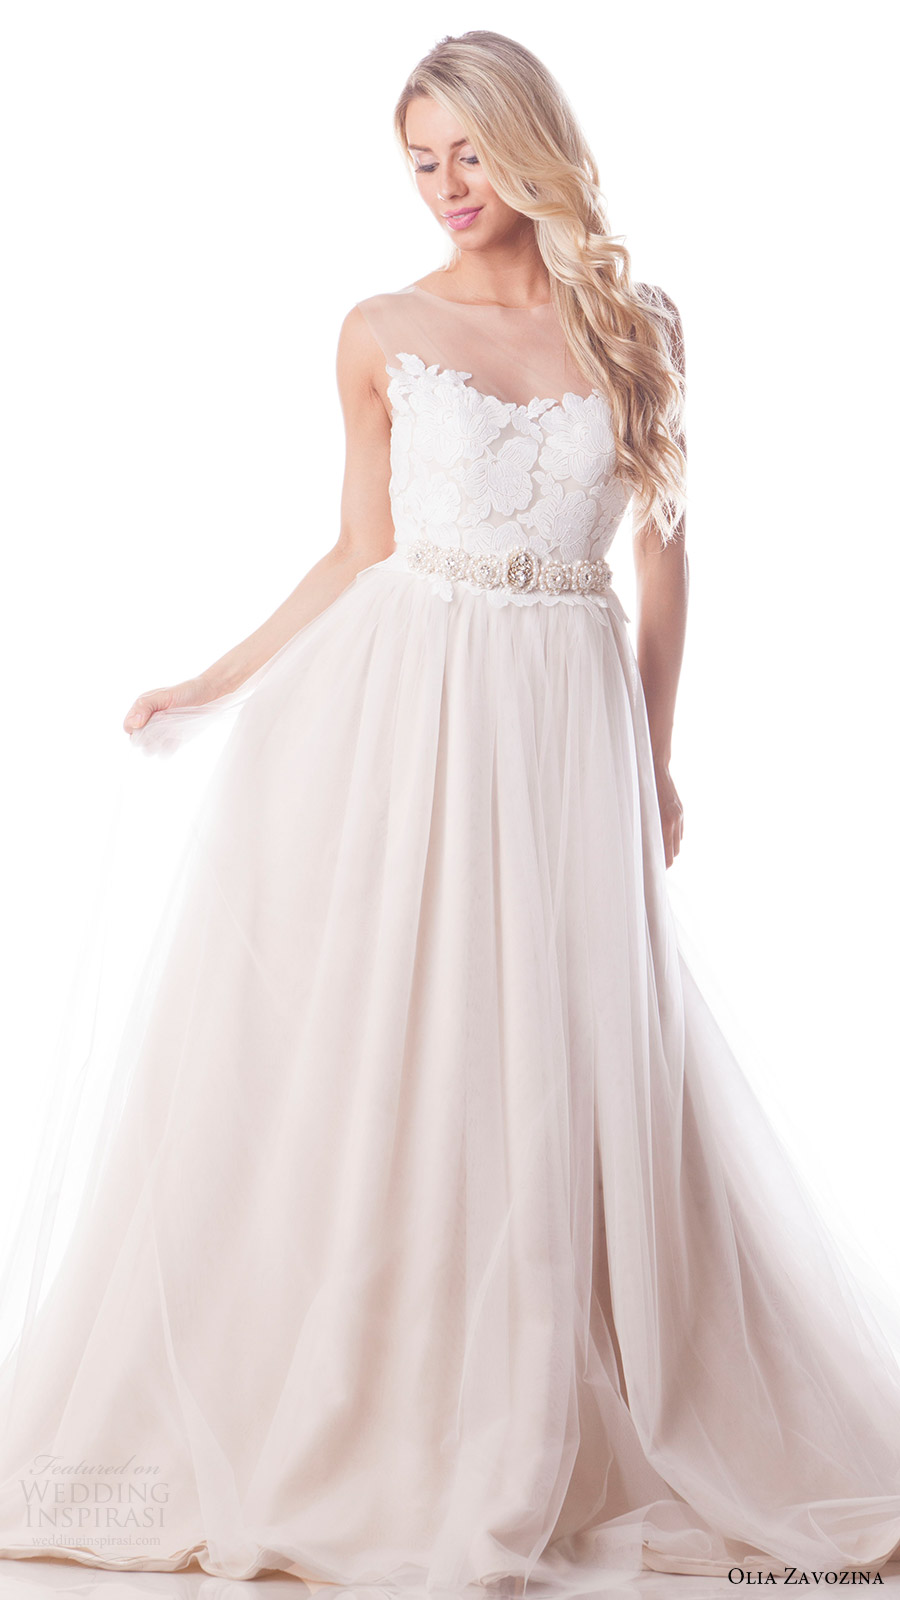 olia zavozina bridal spring 2017 sleeveless illusion neck ball gown wedding dress (elena) mv